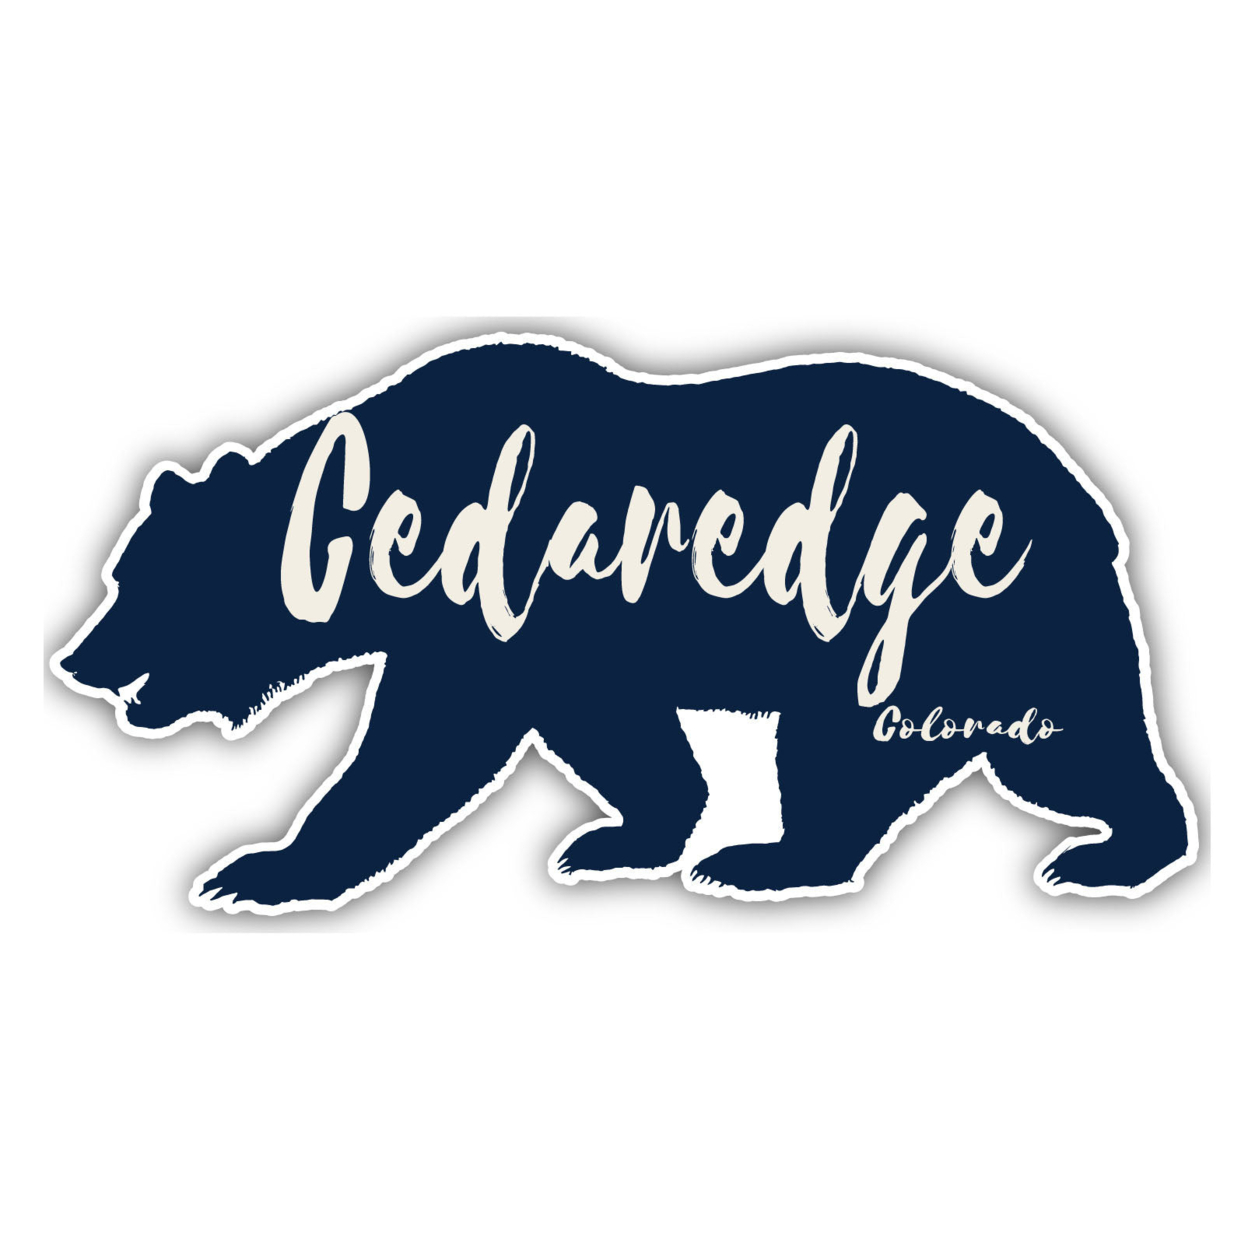 Cedaredge Colorado Souvenir Decorative Stickers (Choose Theme And Size) - Single Unit, 4-Inch, Bear